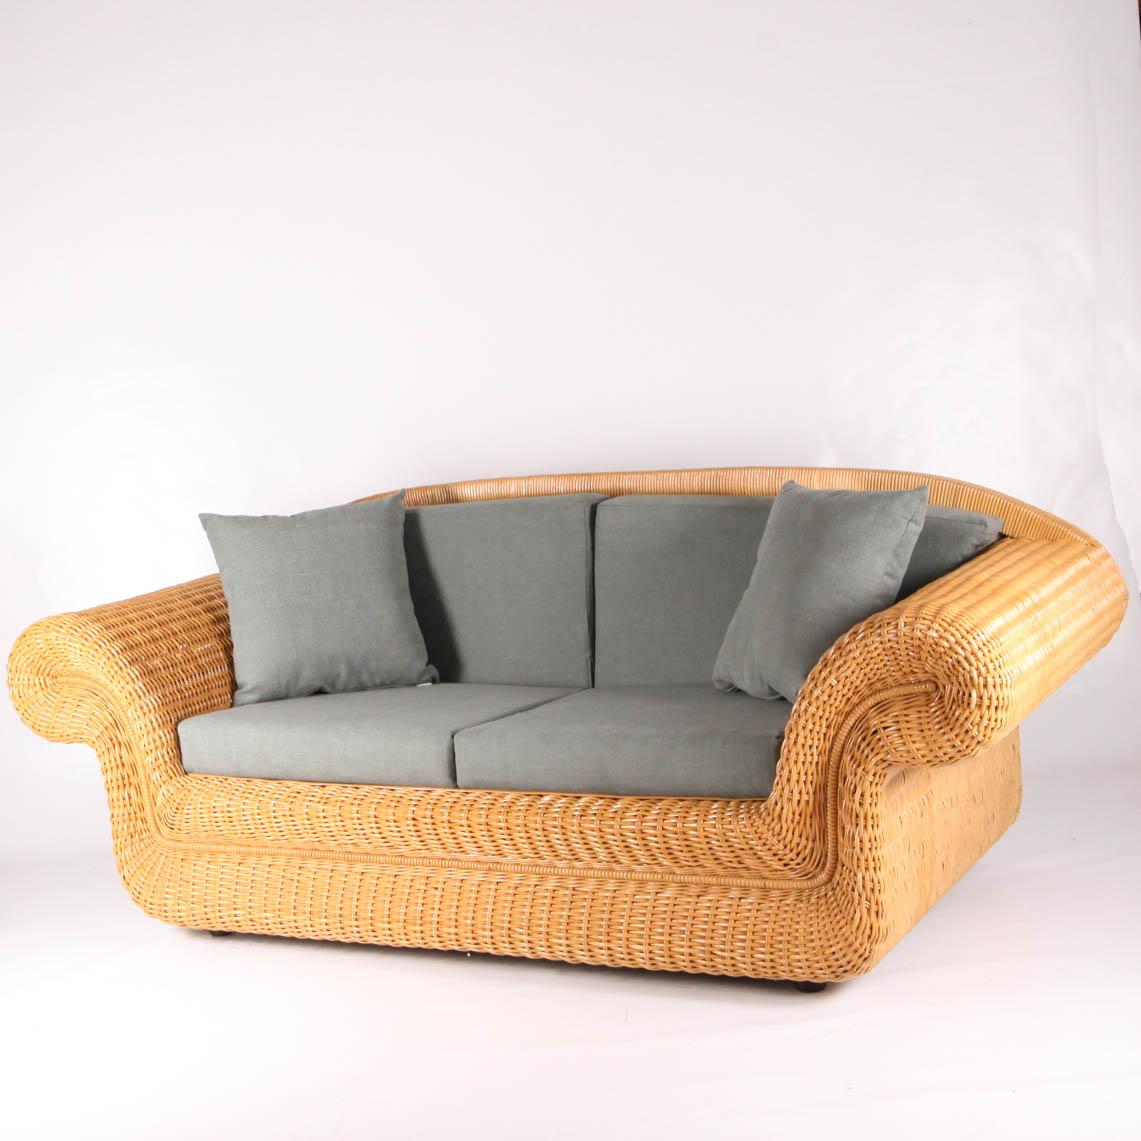 Elegant vintage rattan sofa in very good condition.